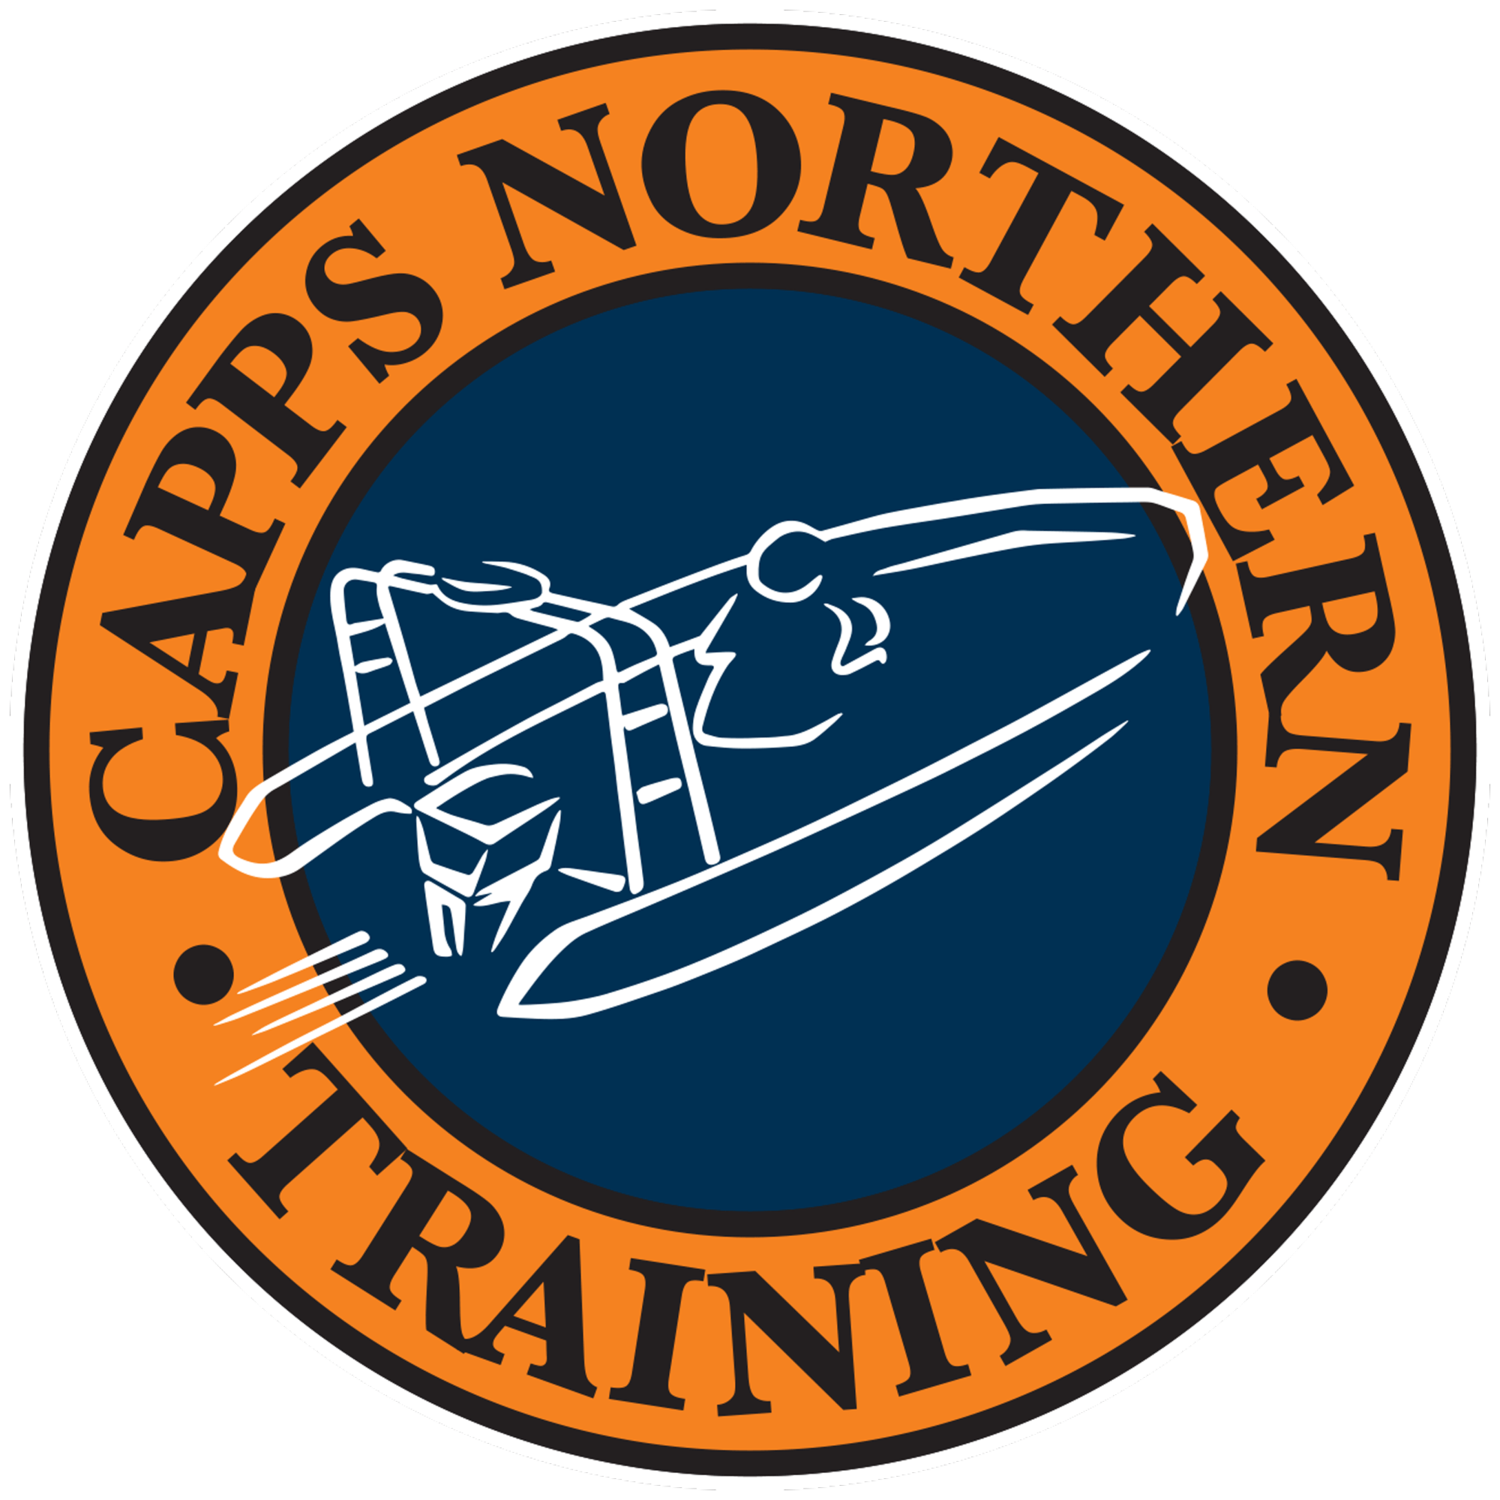 CAPP'S Northern Training